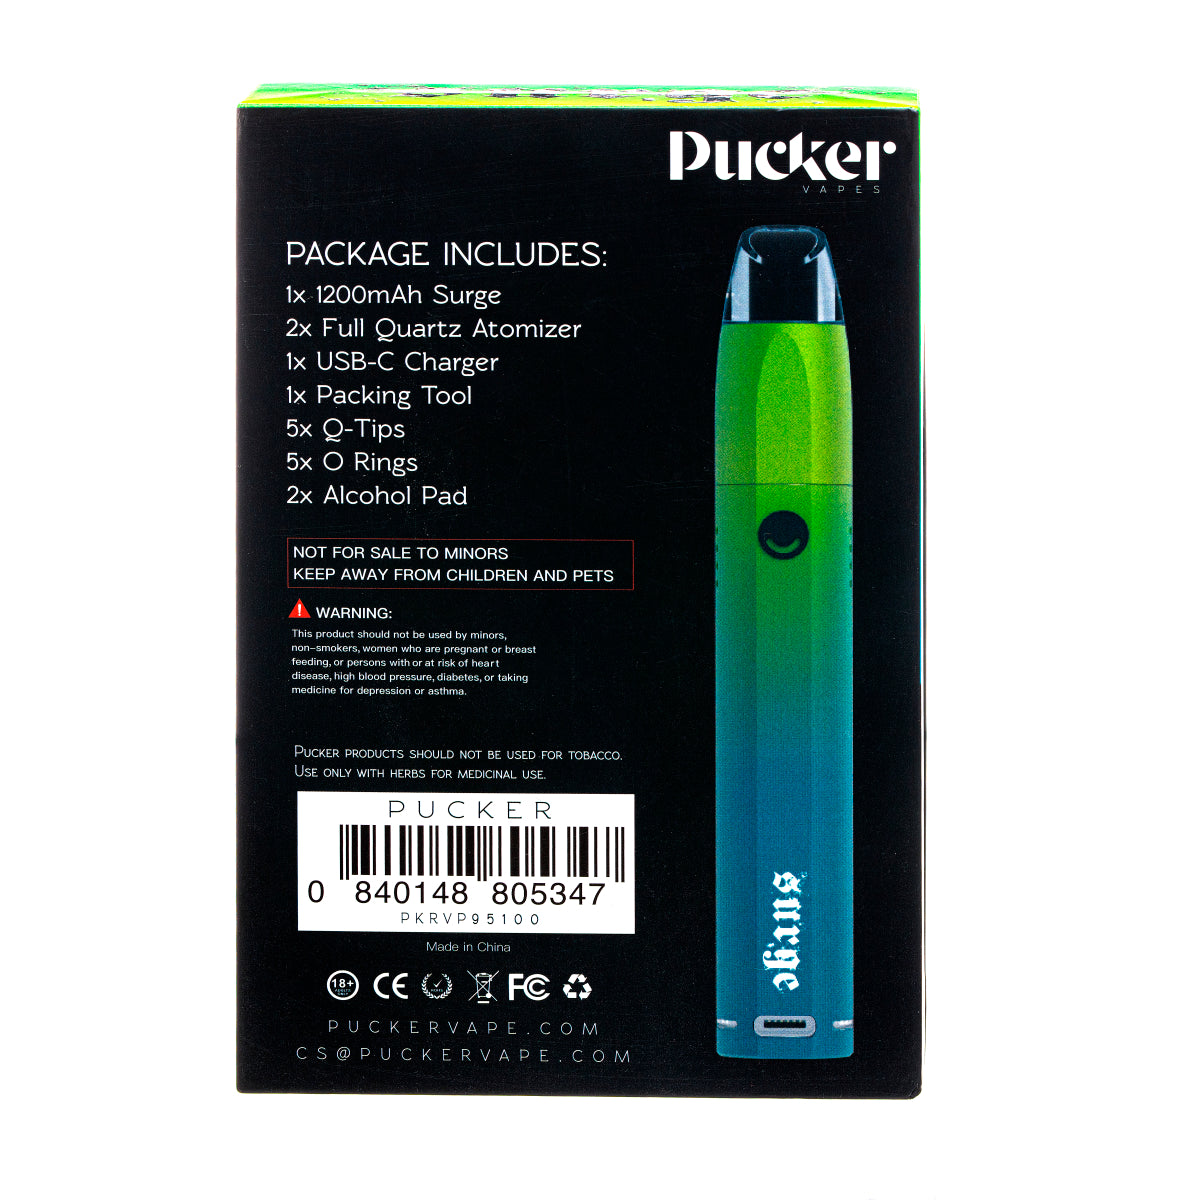 PUCKER "Surge" Smoking Wax Vaporizer